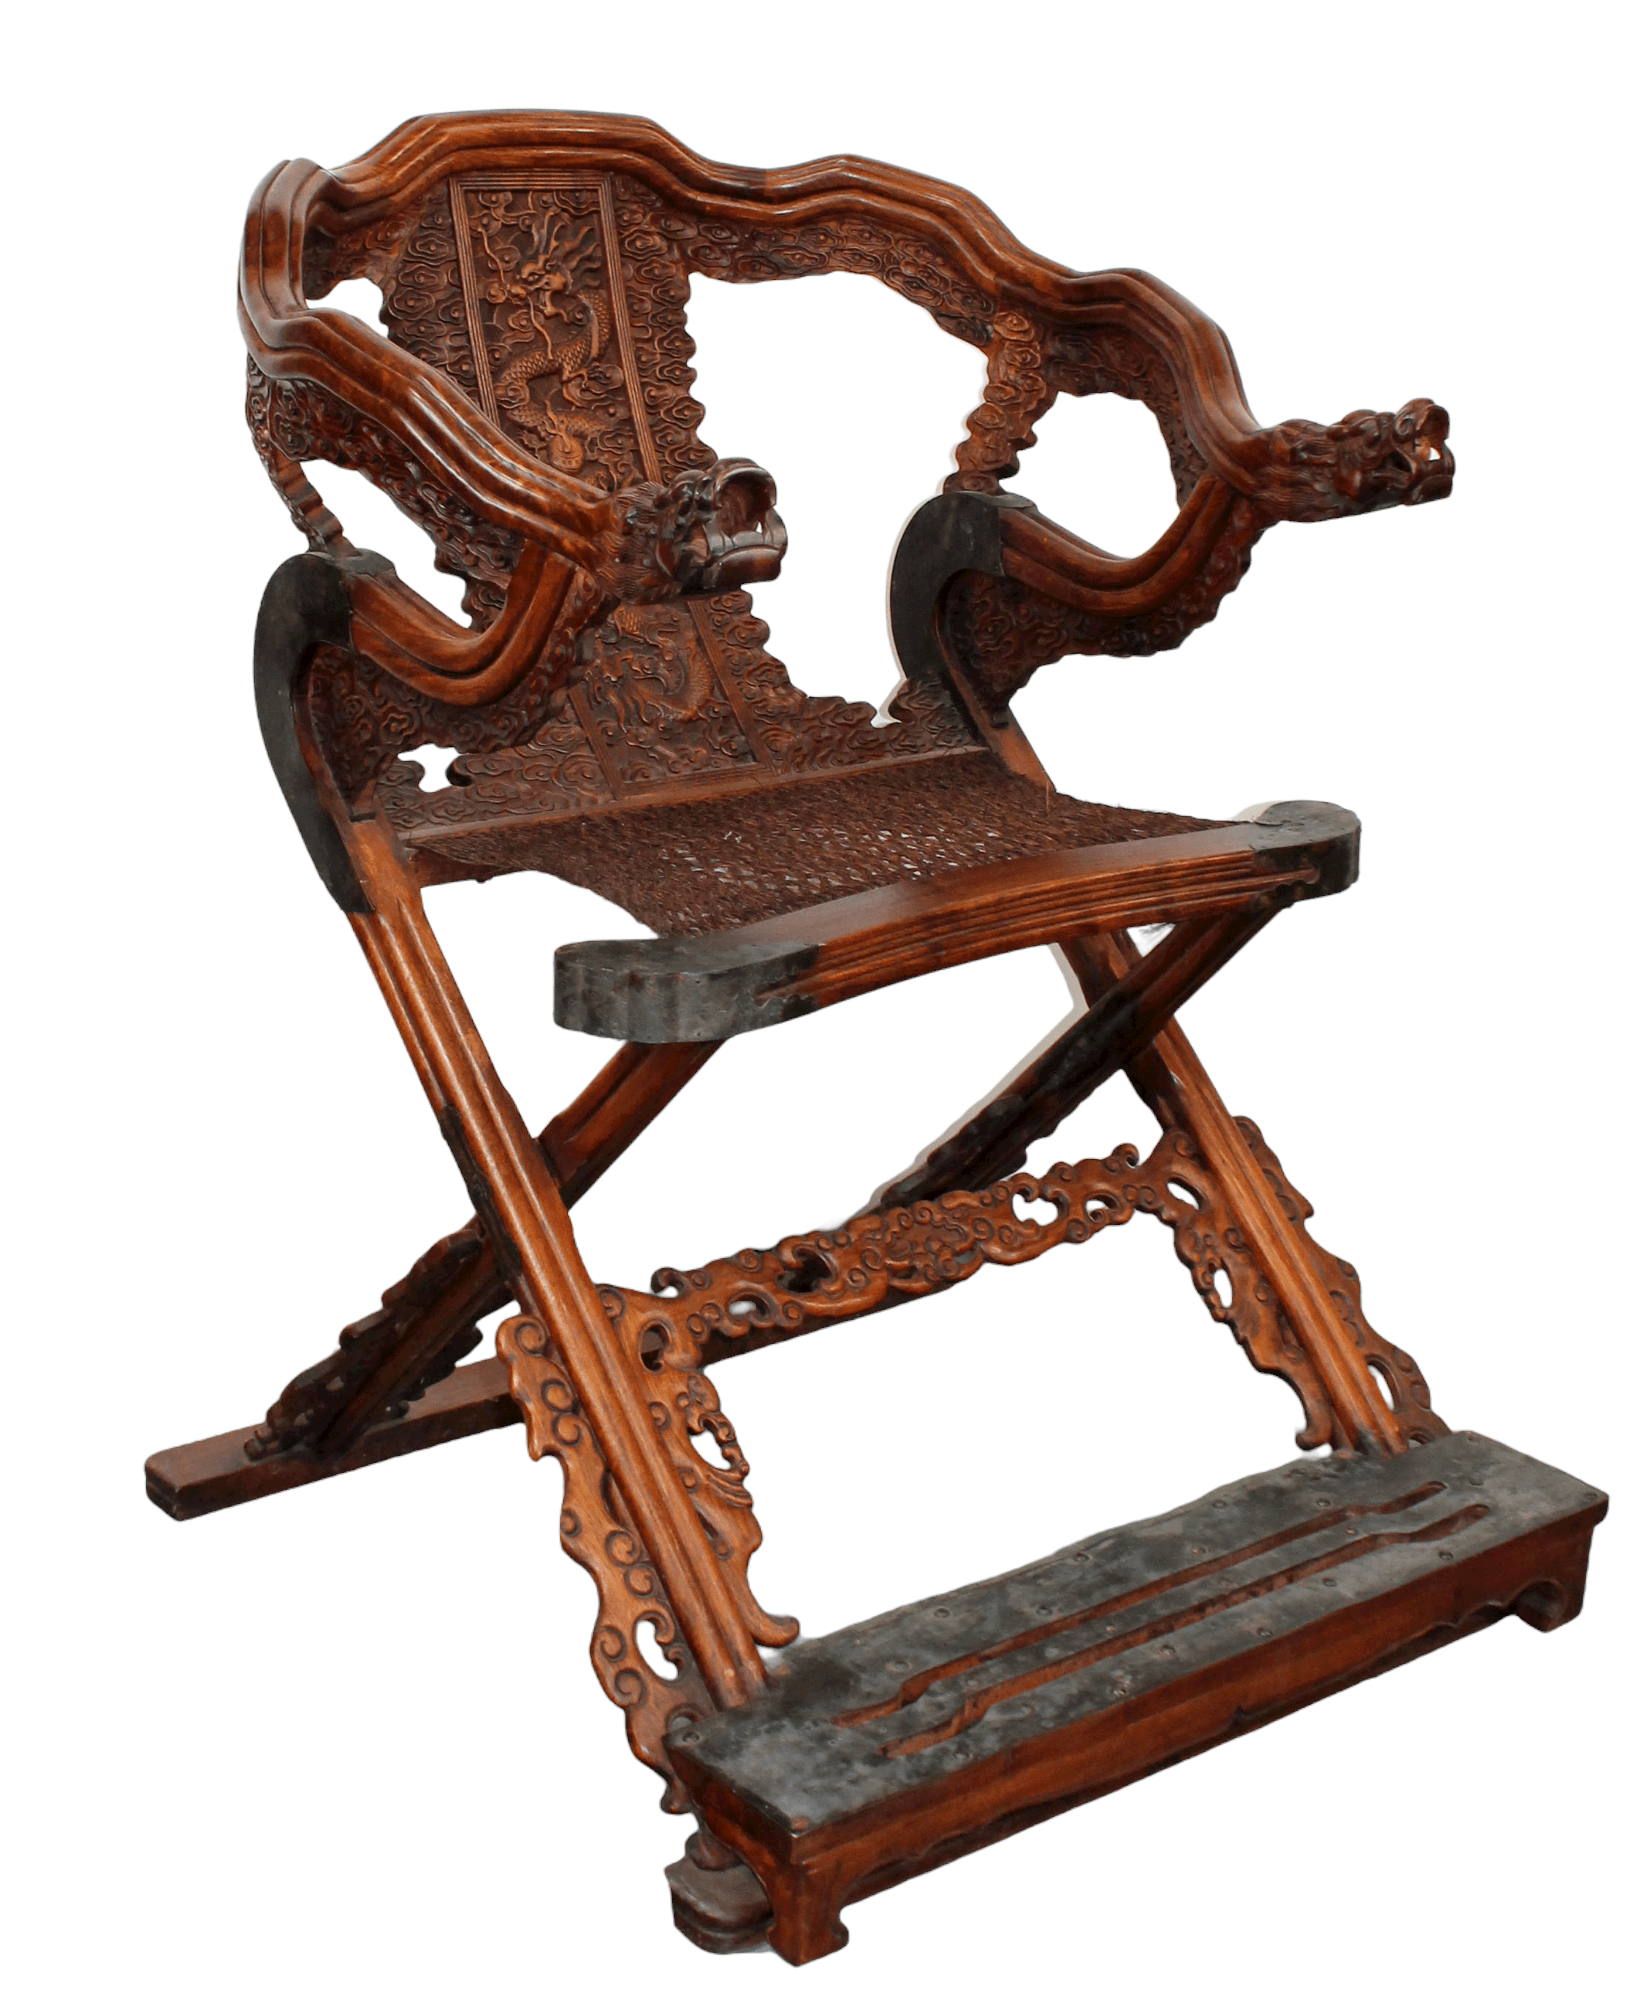 Chinese folding horseshoe chair